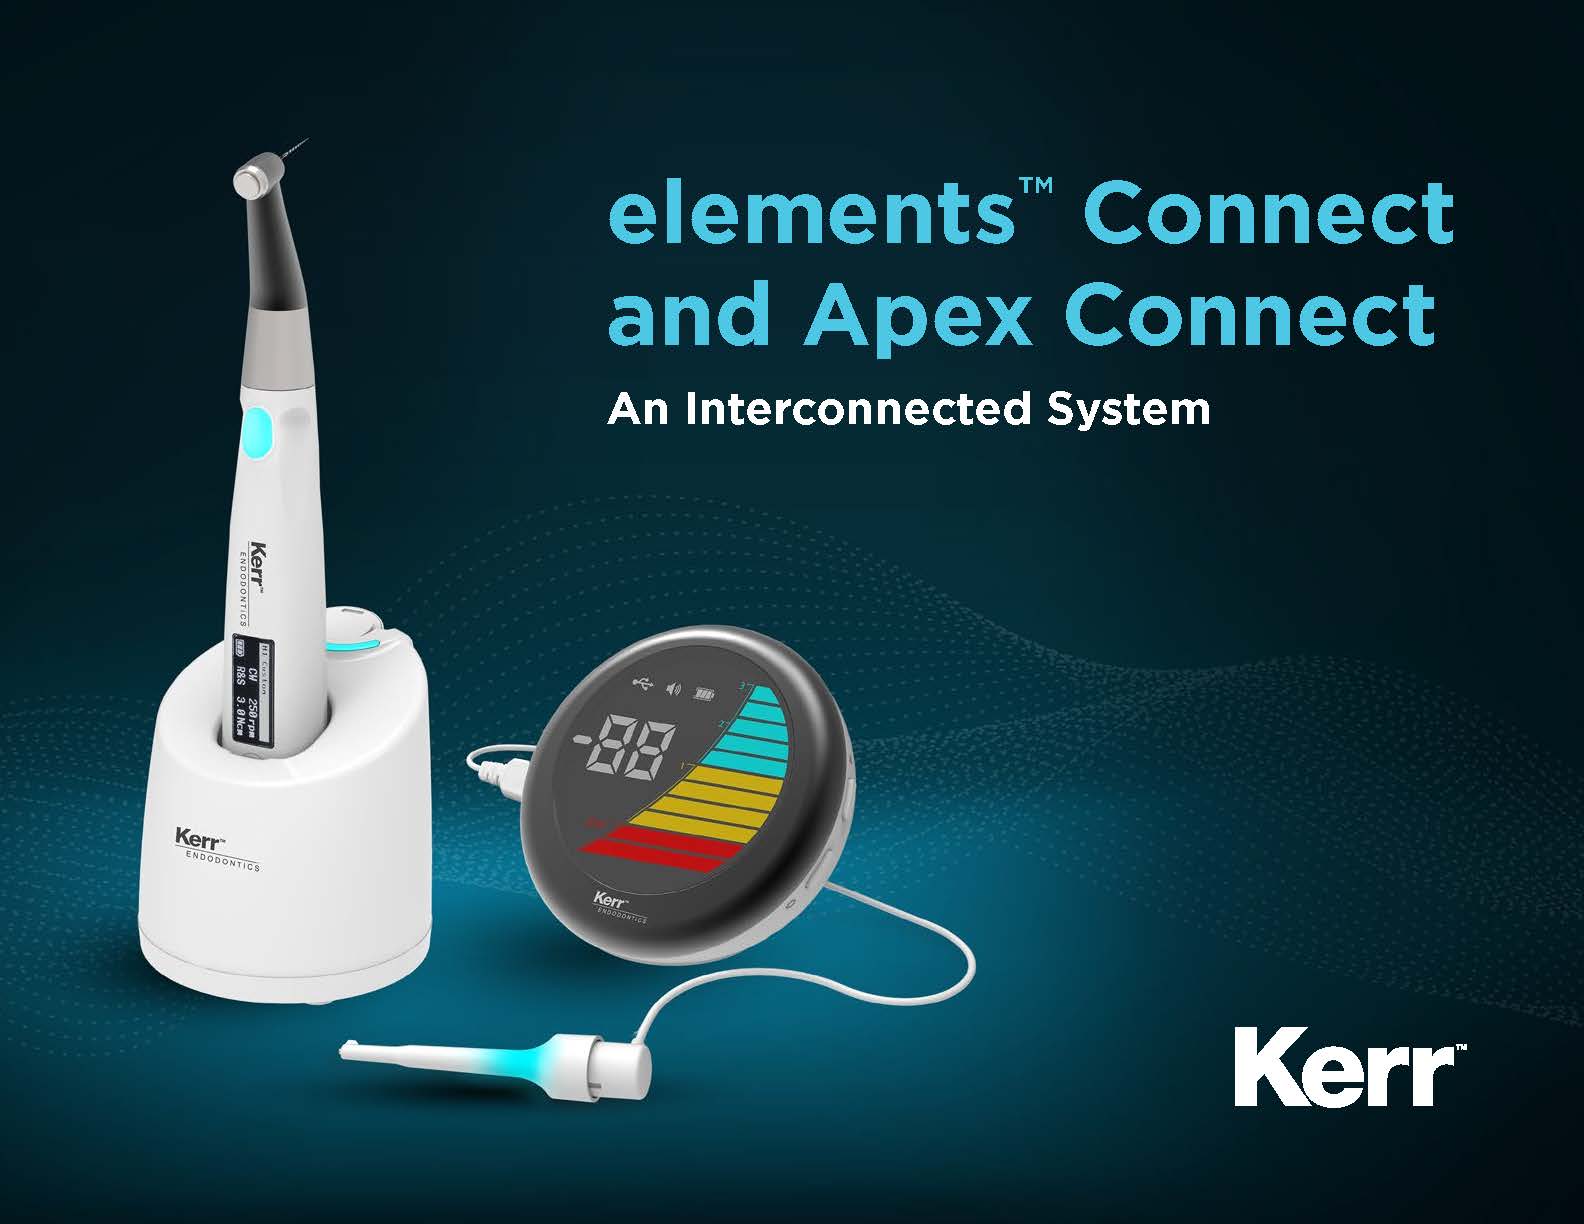 Keystone Dental Announces Market Launch of Nexus Connect